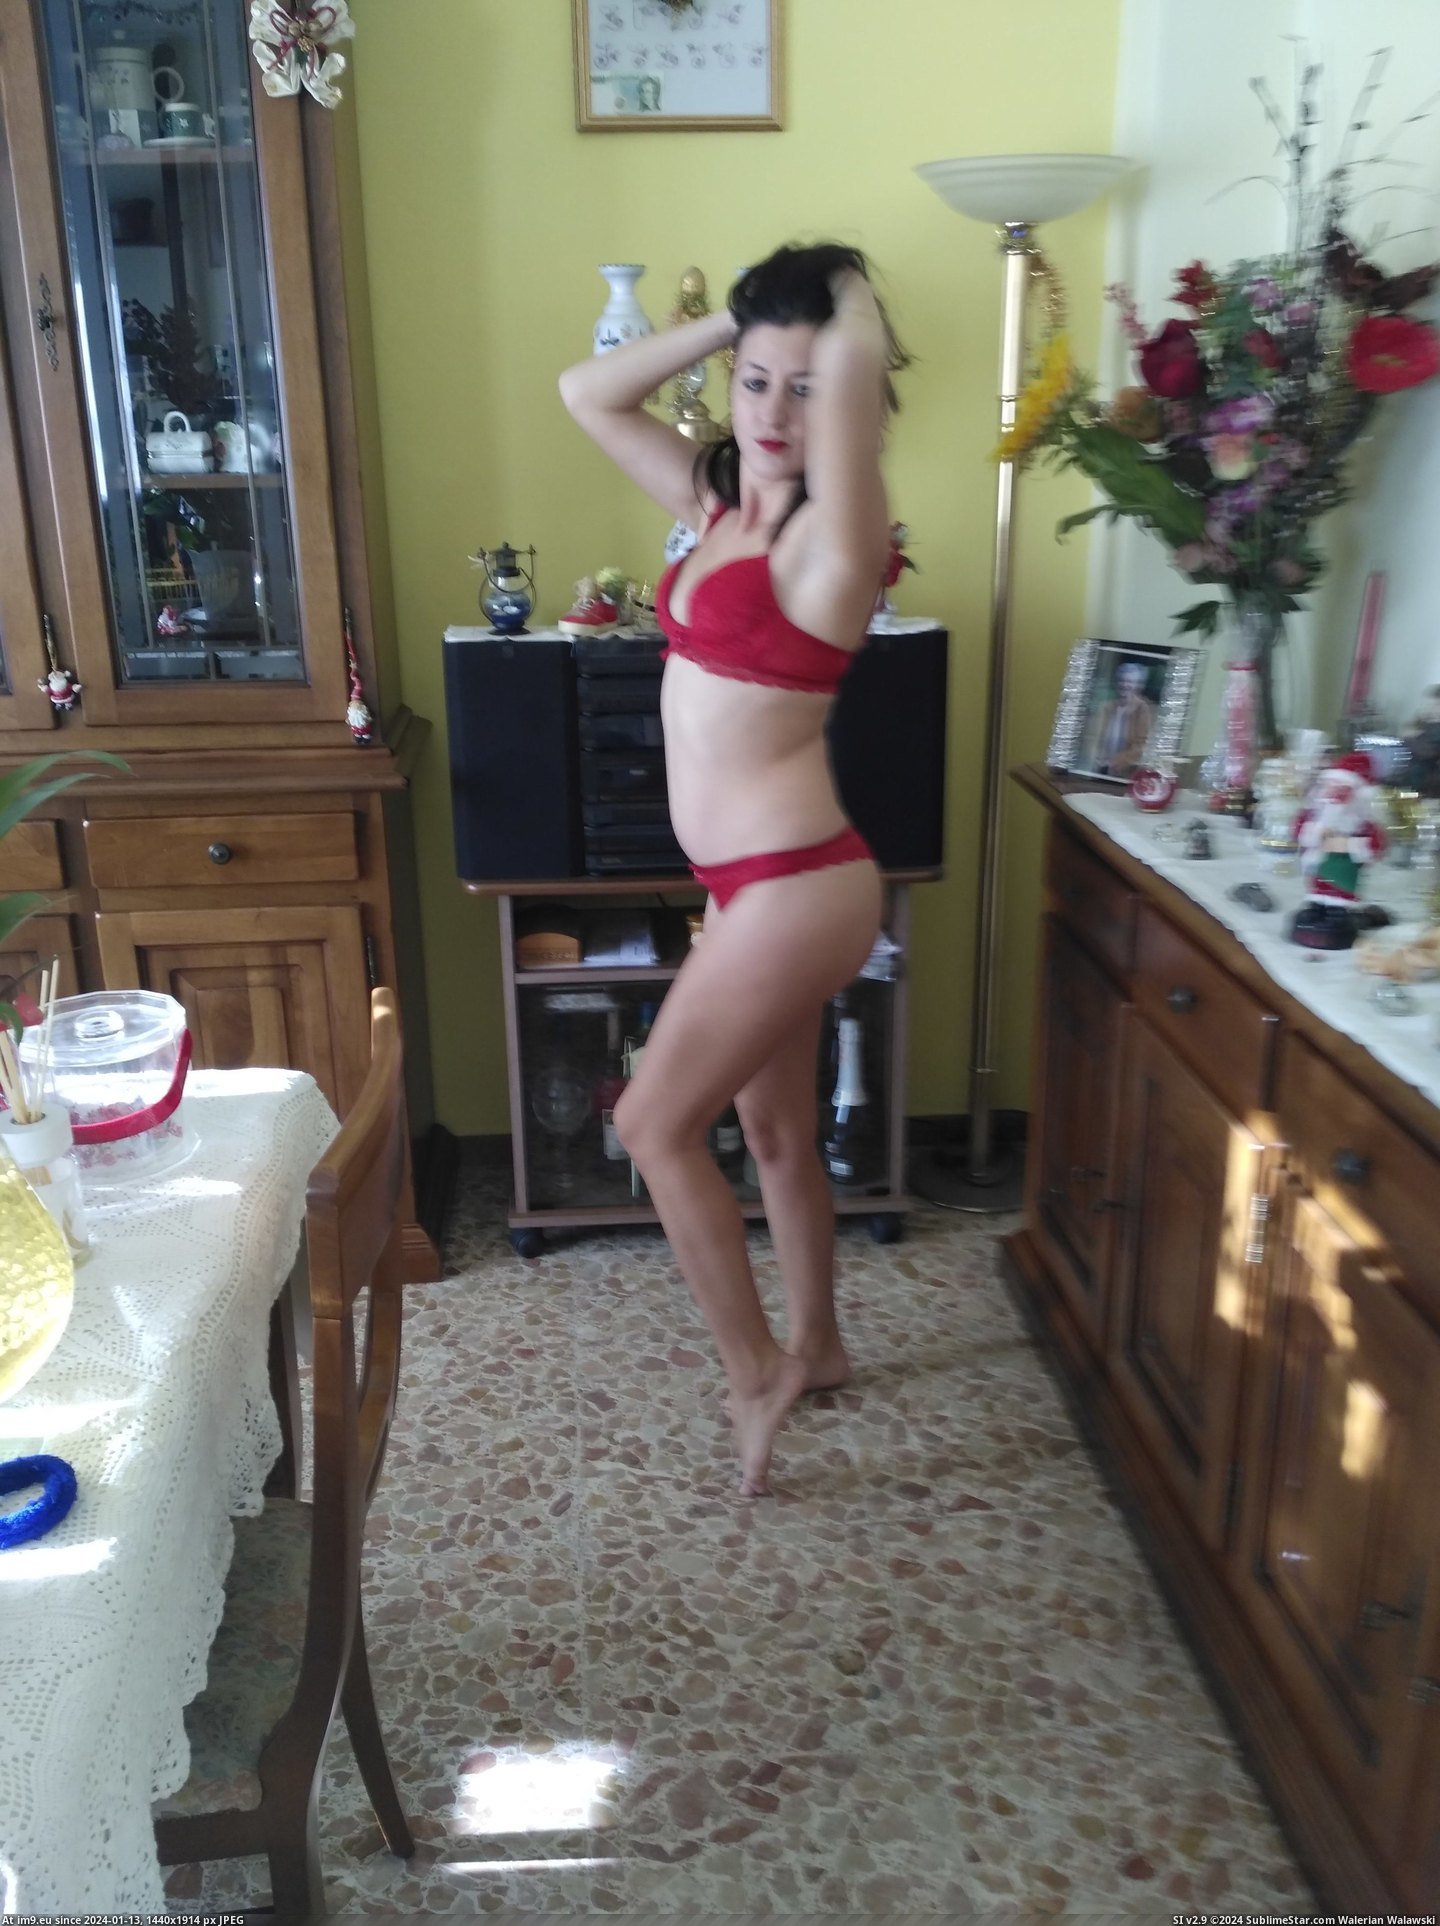 #Sexy #Pussy #Nude #Milf #Naked #Lingerie #Legs #Moglie #Italiana #Nuda IMG_20161227_105348 Pic. (Bild von album Cinzia from Vigevano,Italy))